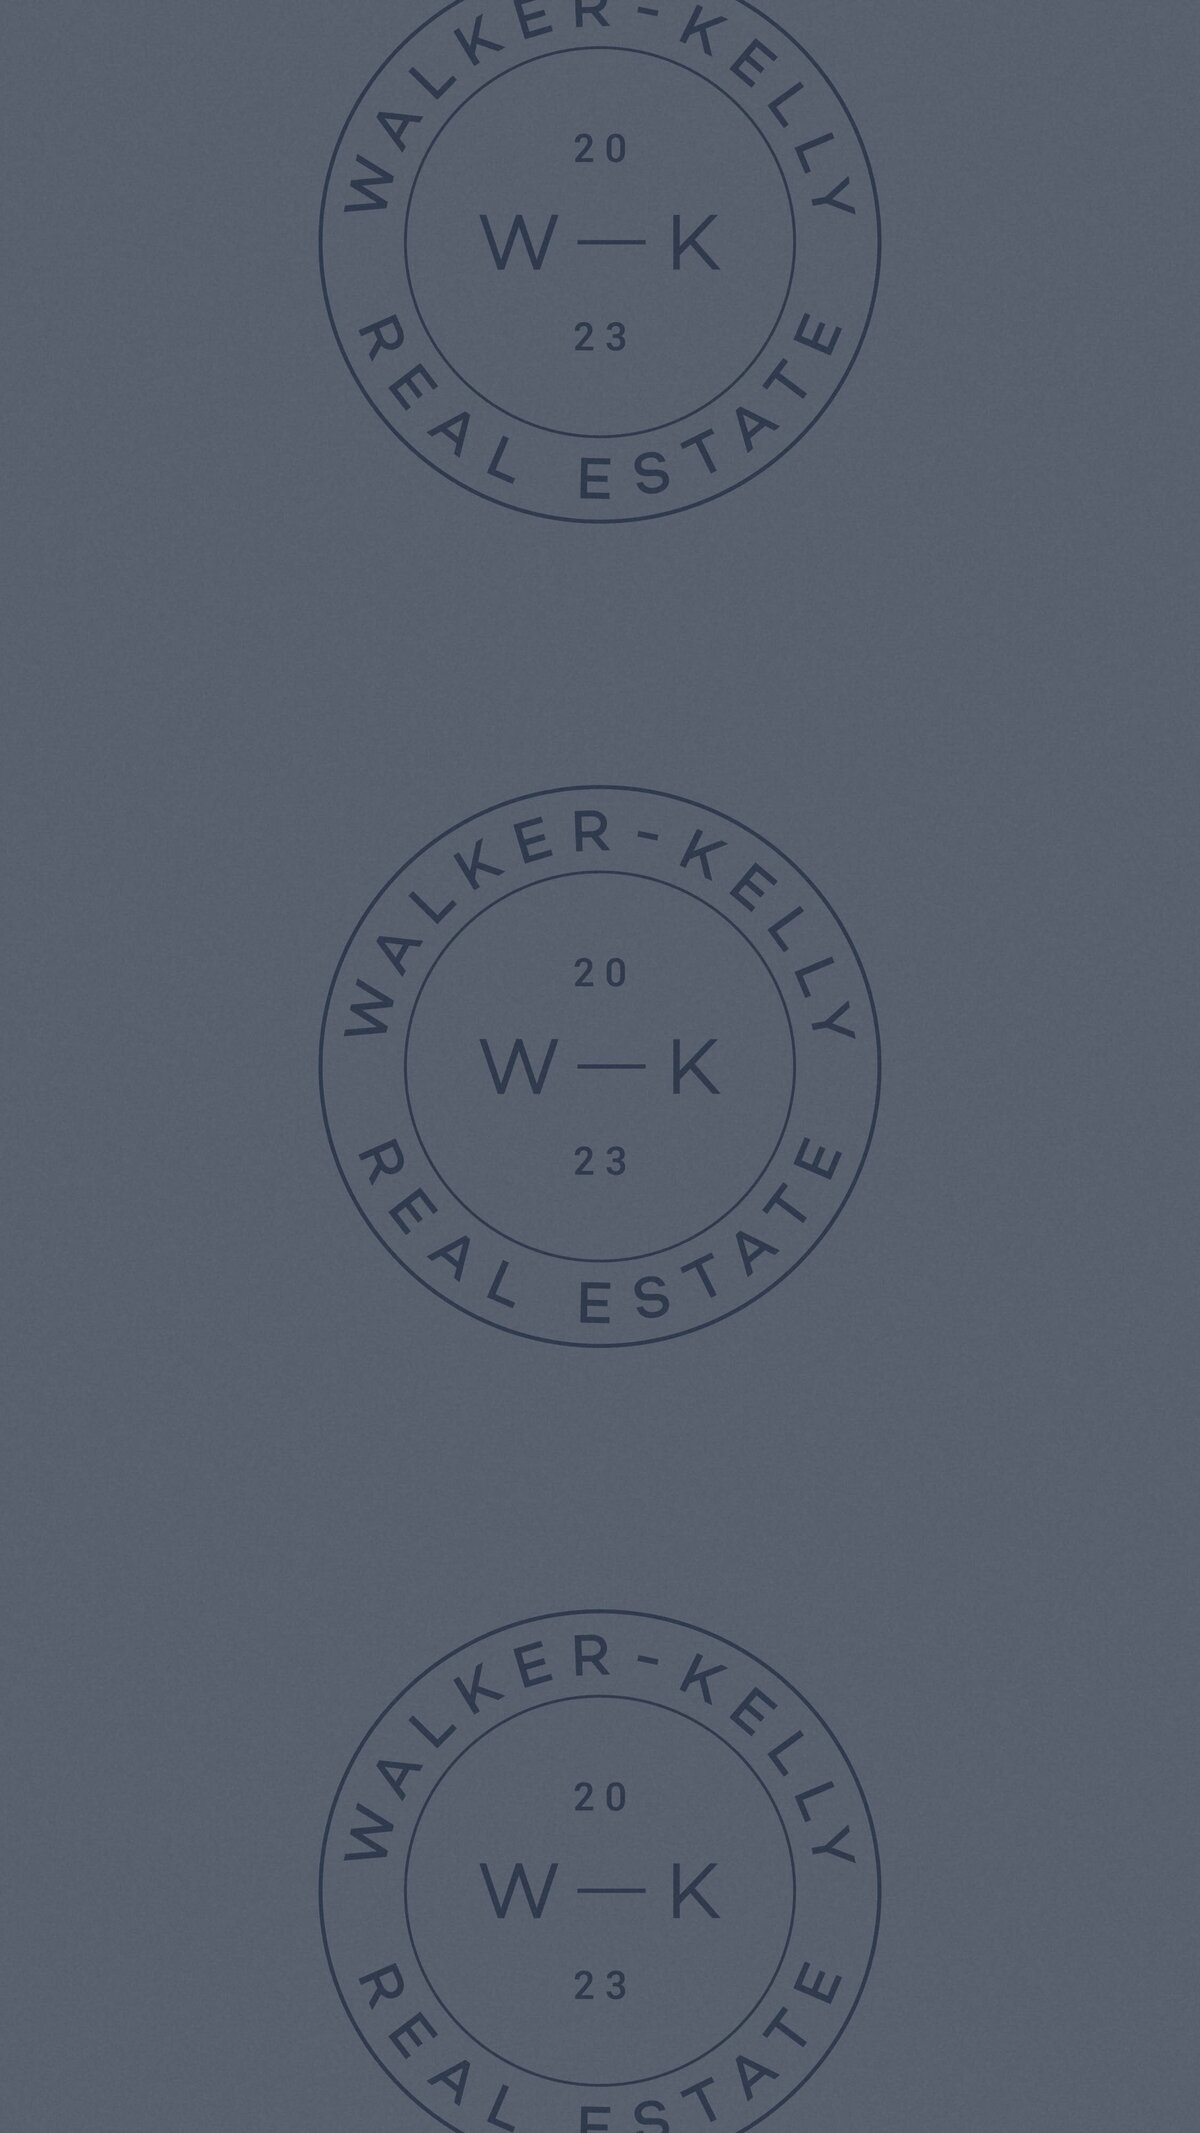 Walker-KellyRealEstate_LaunchGraphics_Mobile26